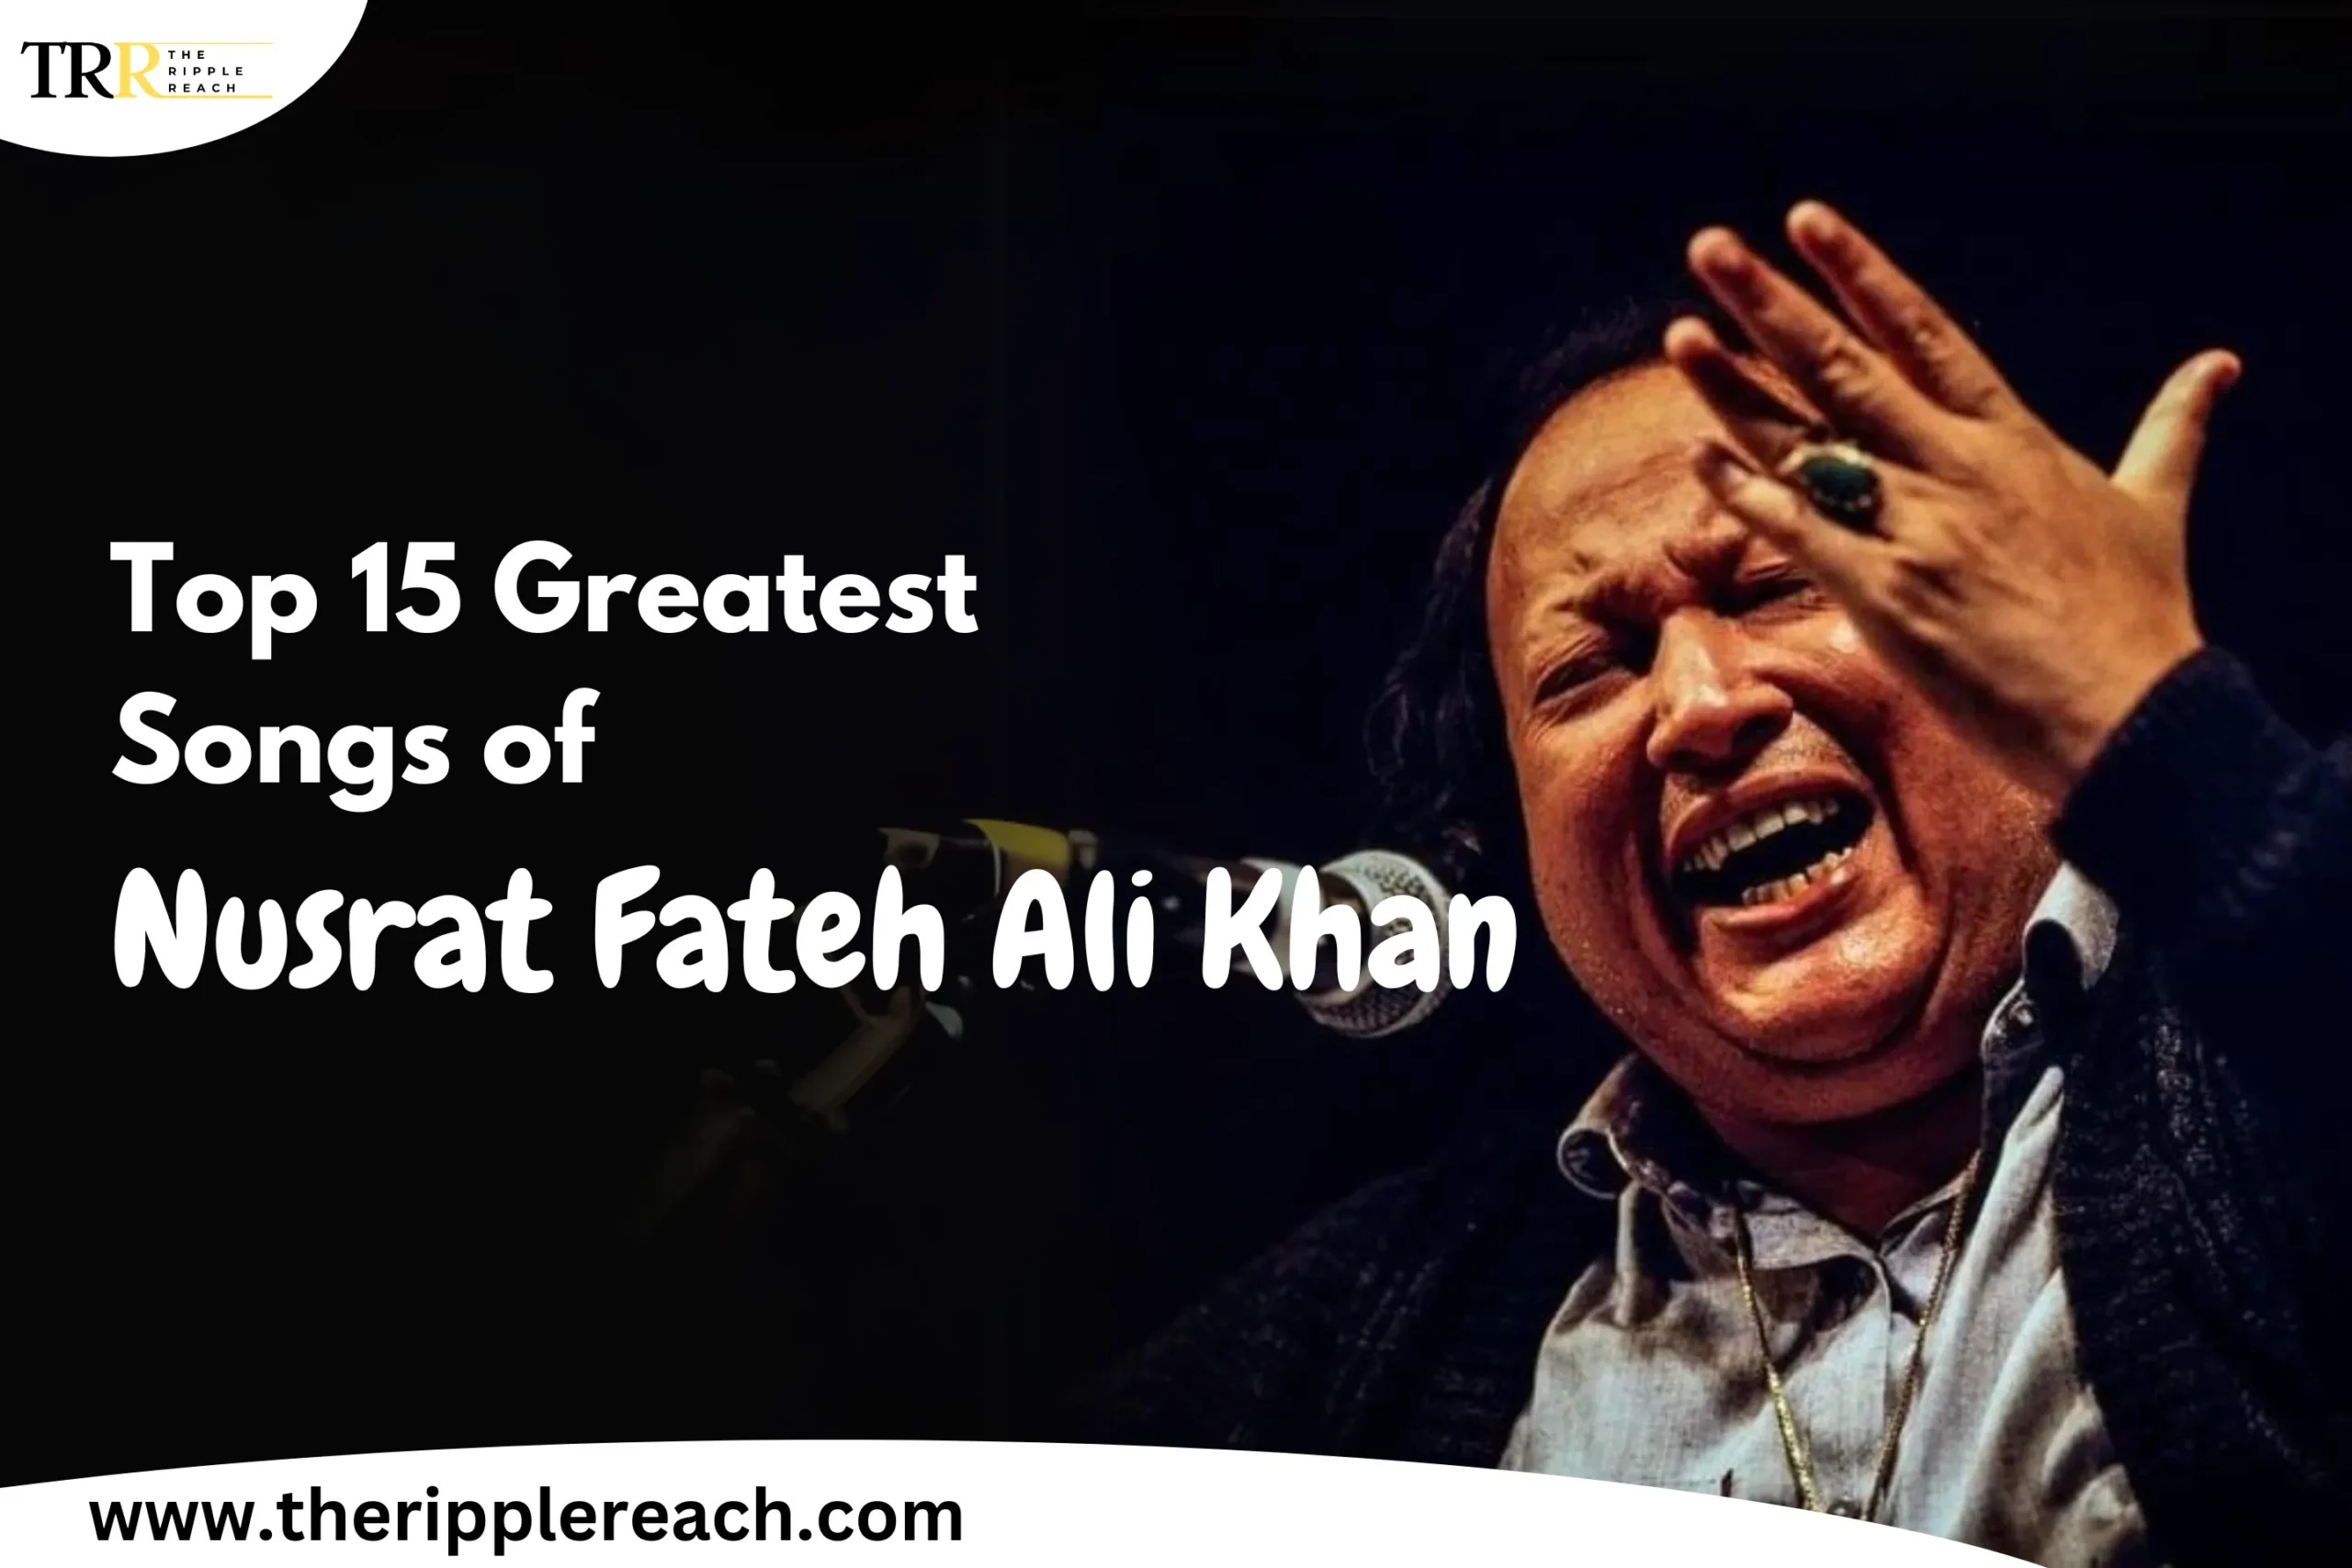 Top 15 Greatest Songs of Nusrat Fateh Ali Khan